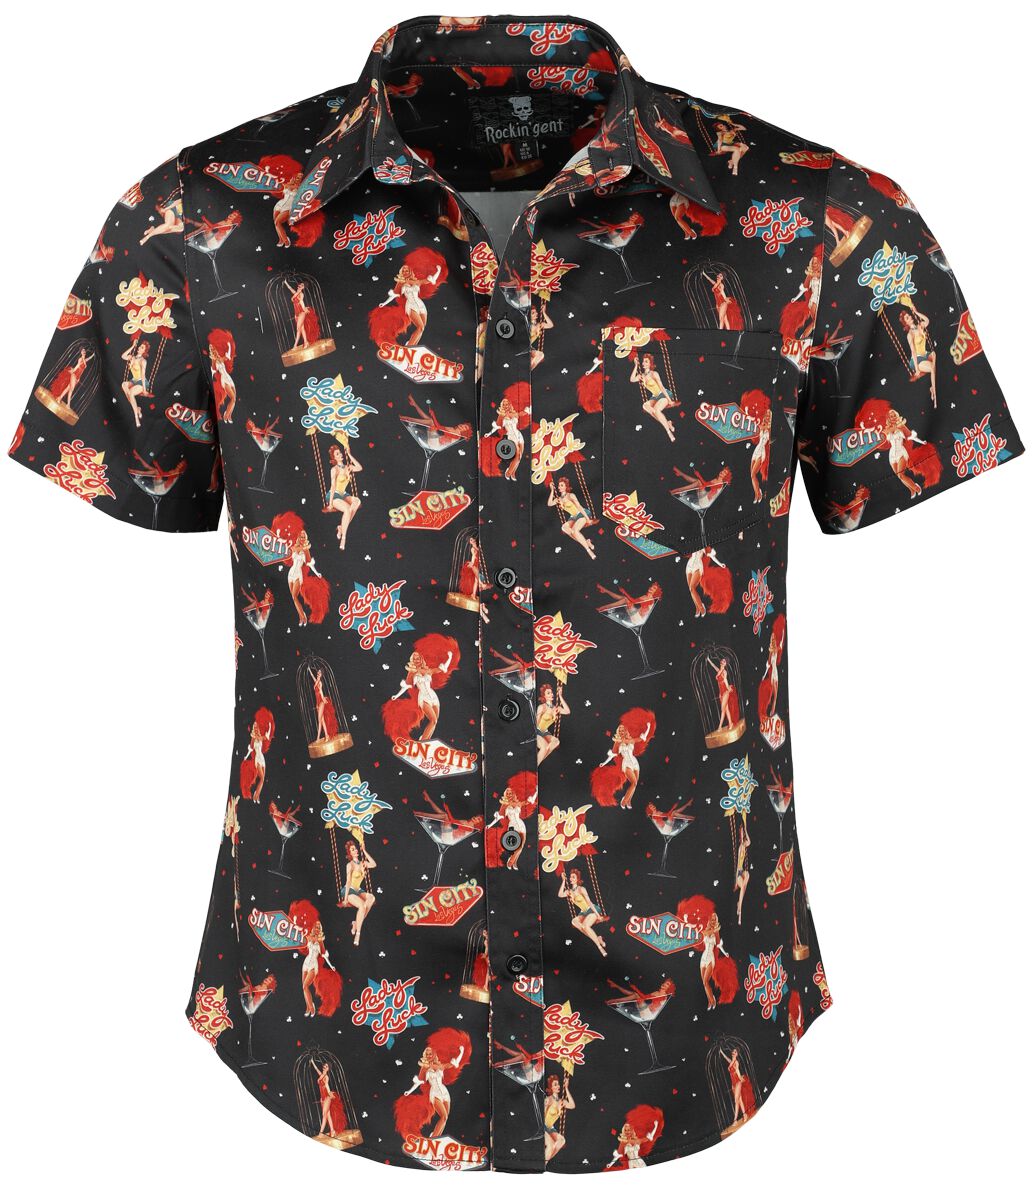 Image of Camicia Maniche Corte Rockabilly di Rockin' Gent shirt - Las Vegas - S a XL - Uomo - nero